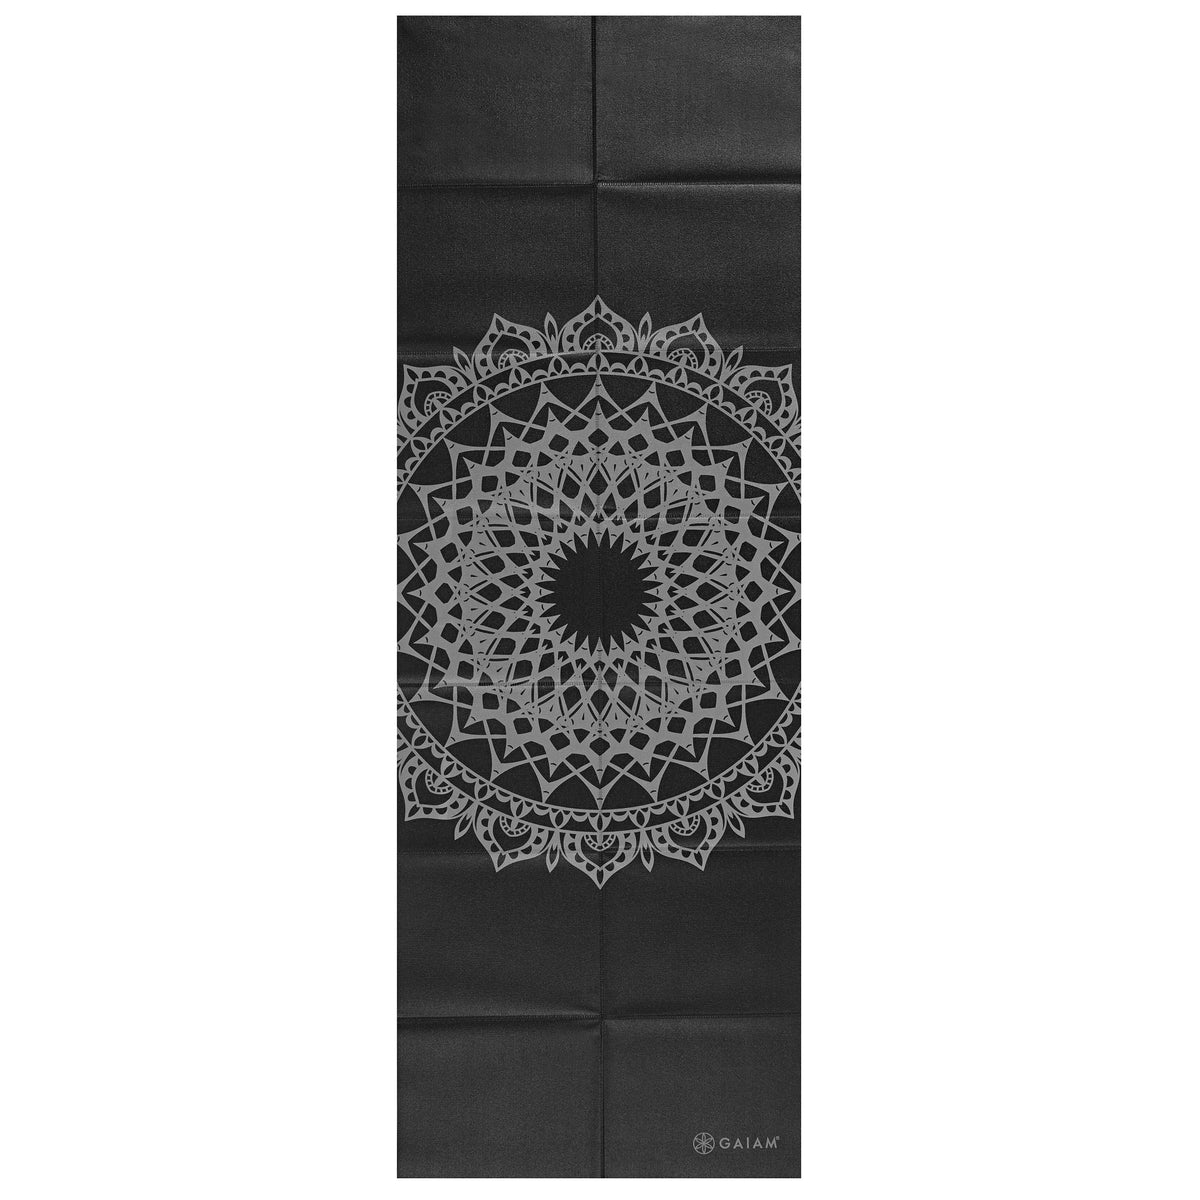 Gaiam Foldable Yoga Mat (2mm) Midnight Marrakesh flat